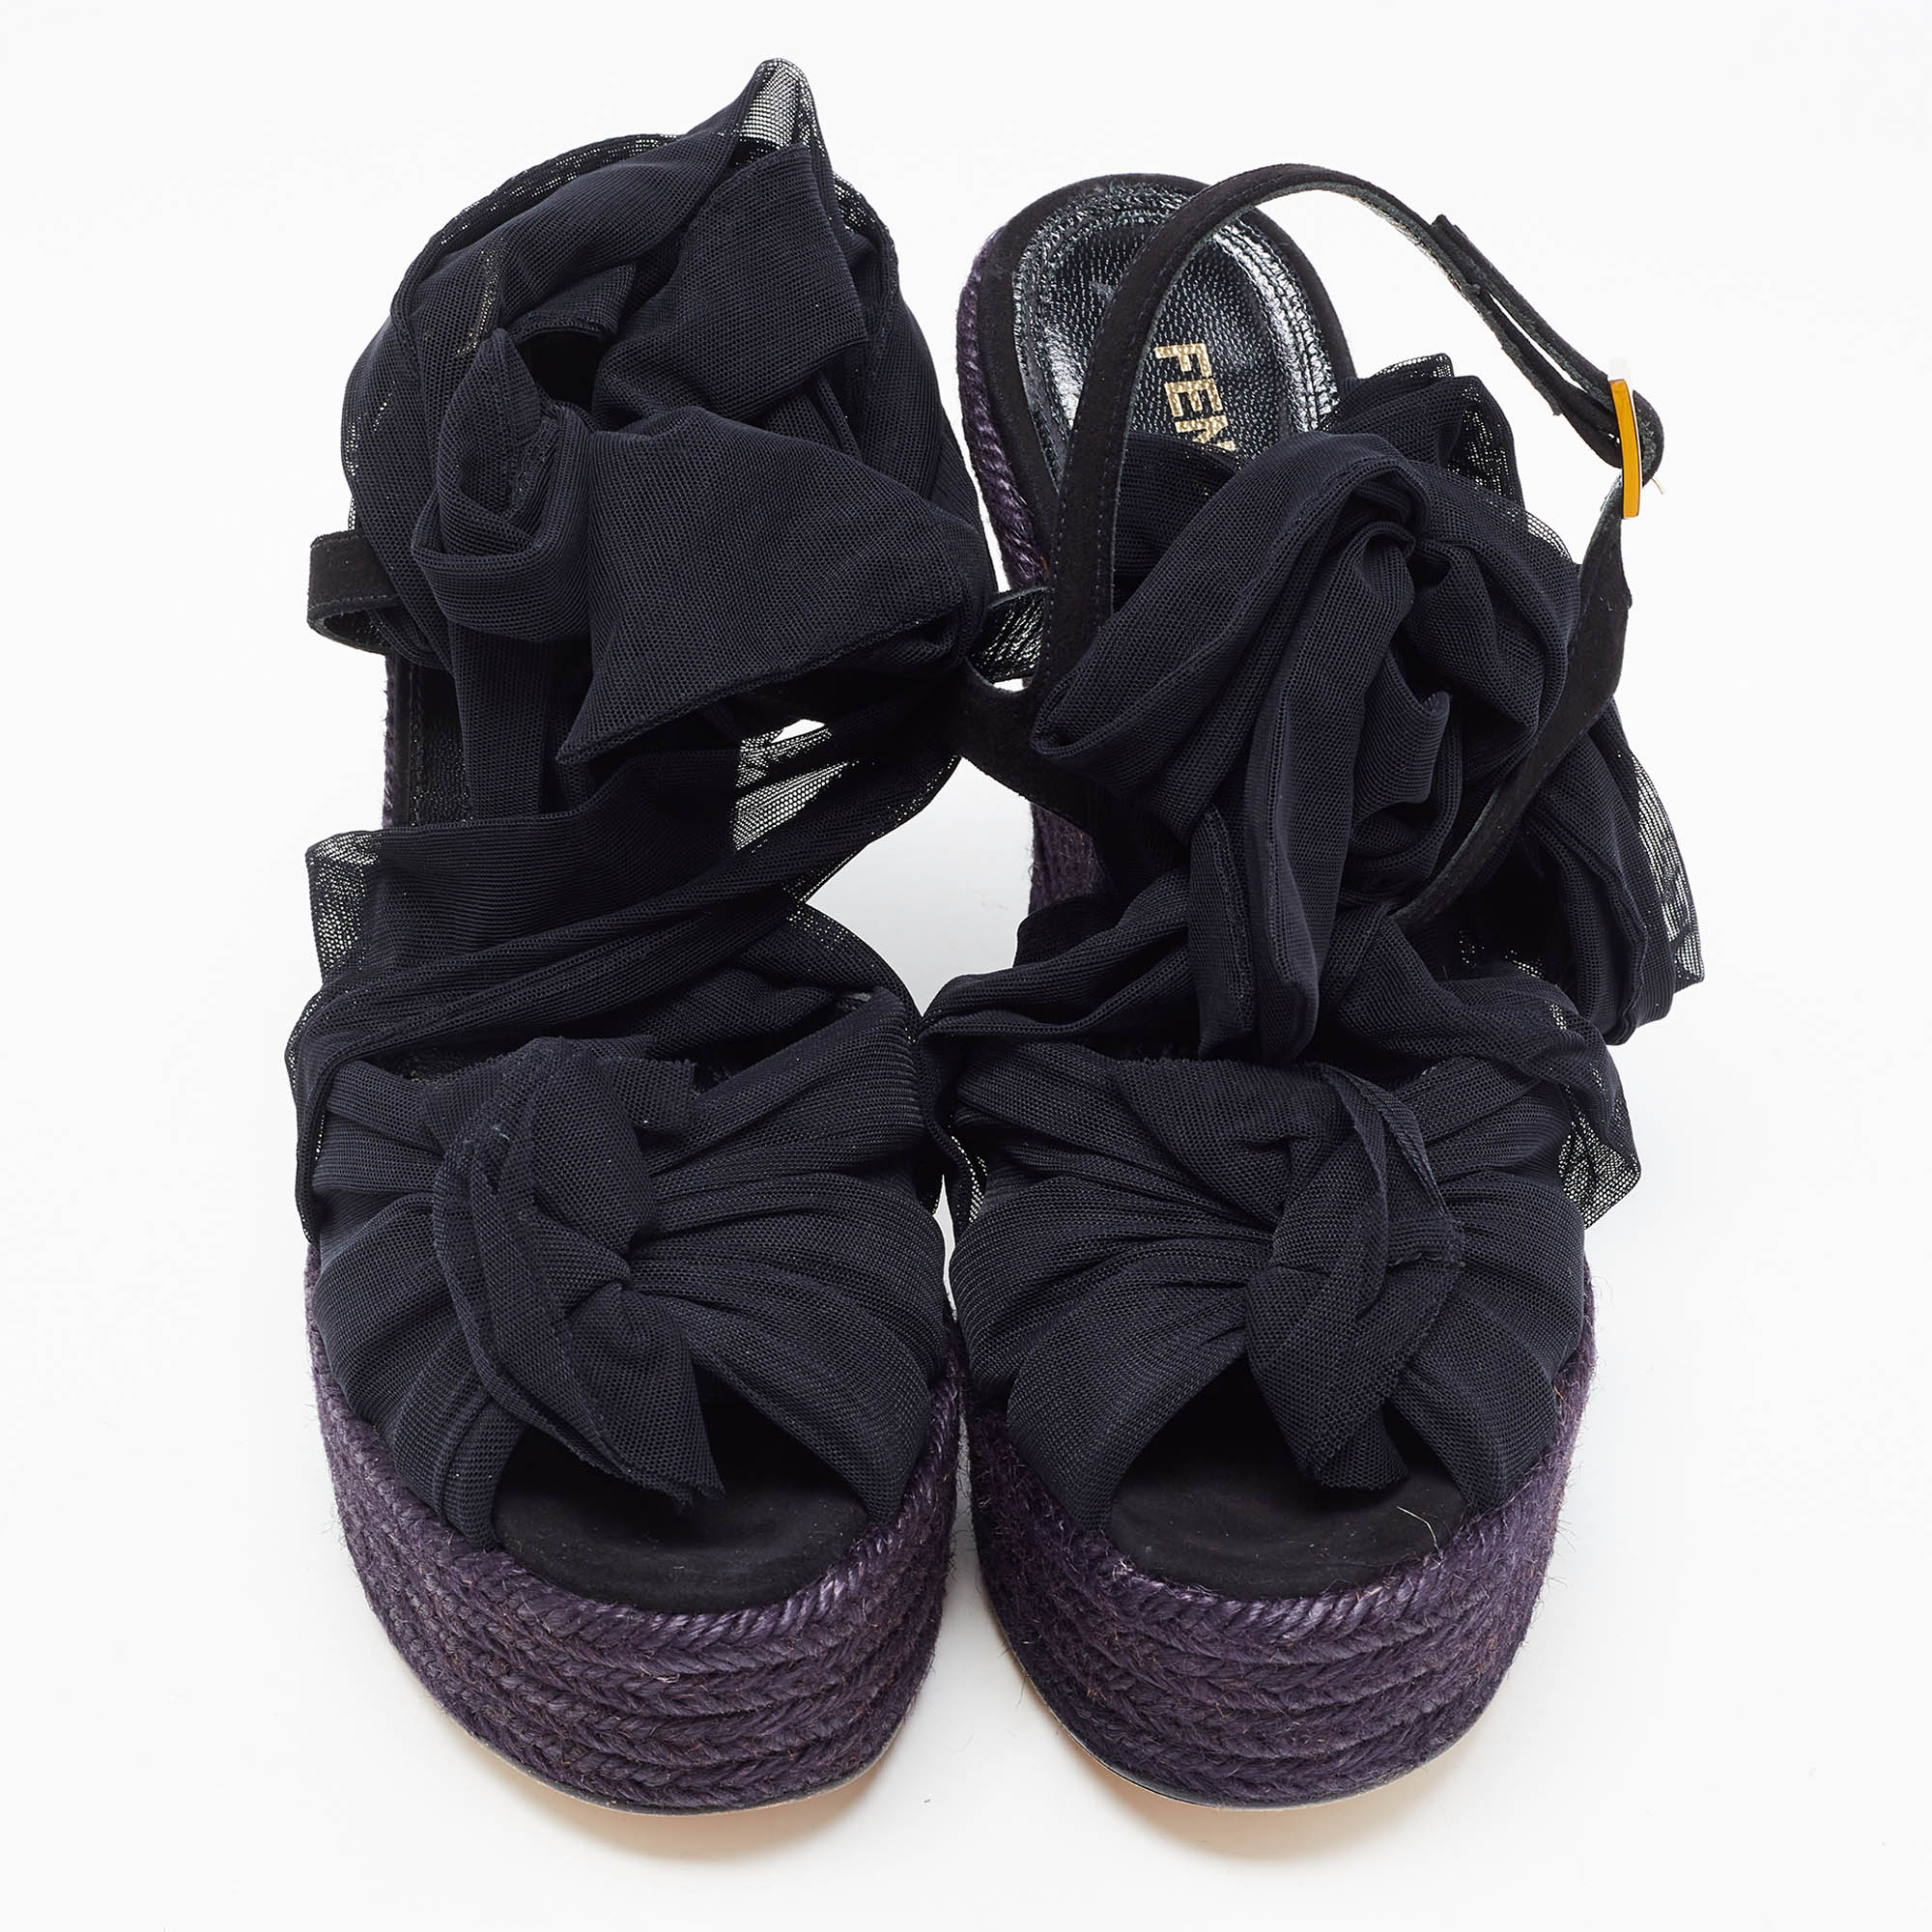 Fendi Black Mesh Fabric And Suede Wedge Platform Espadrille Ankle Strap Sandals Size 36.5